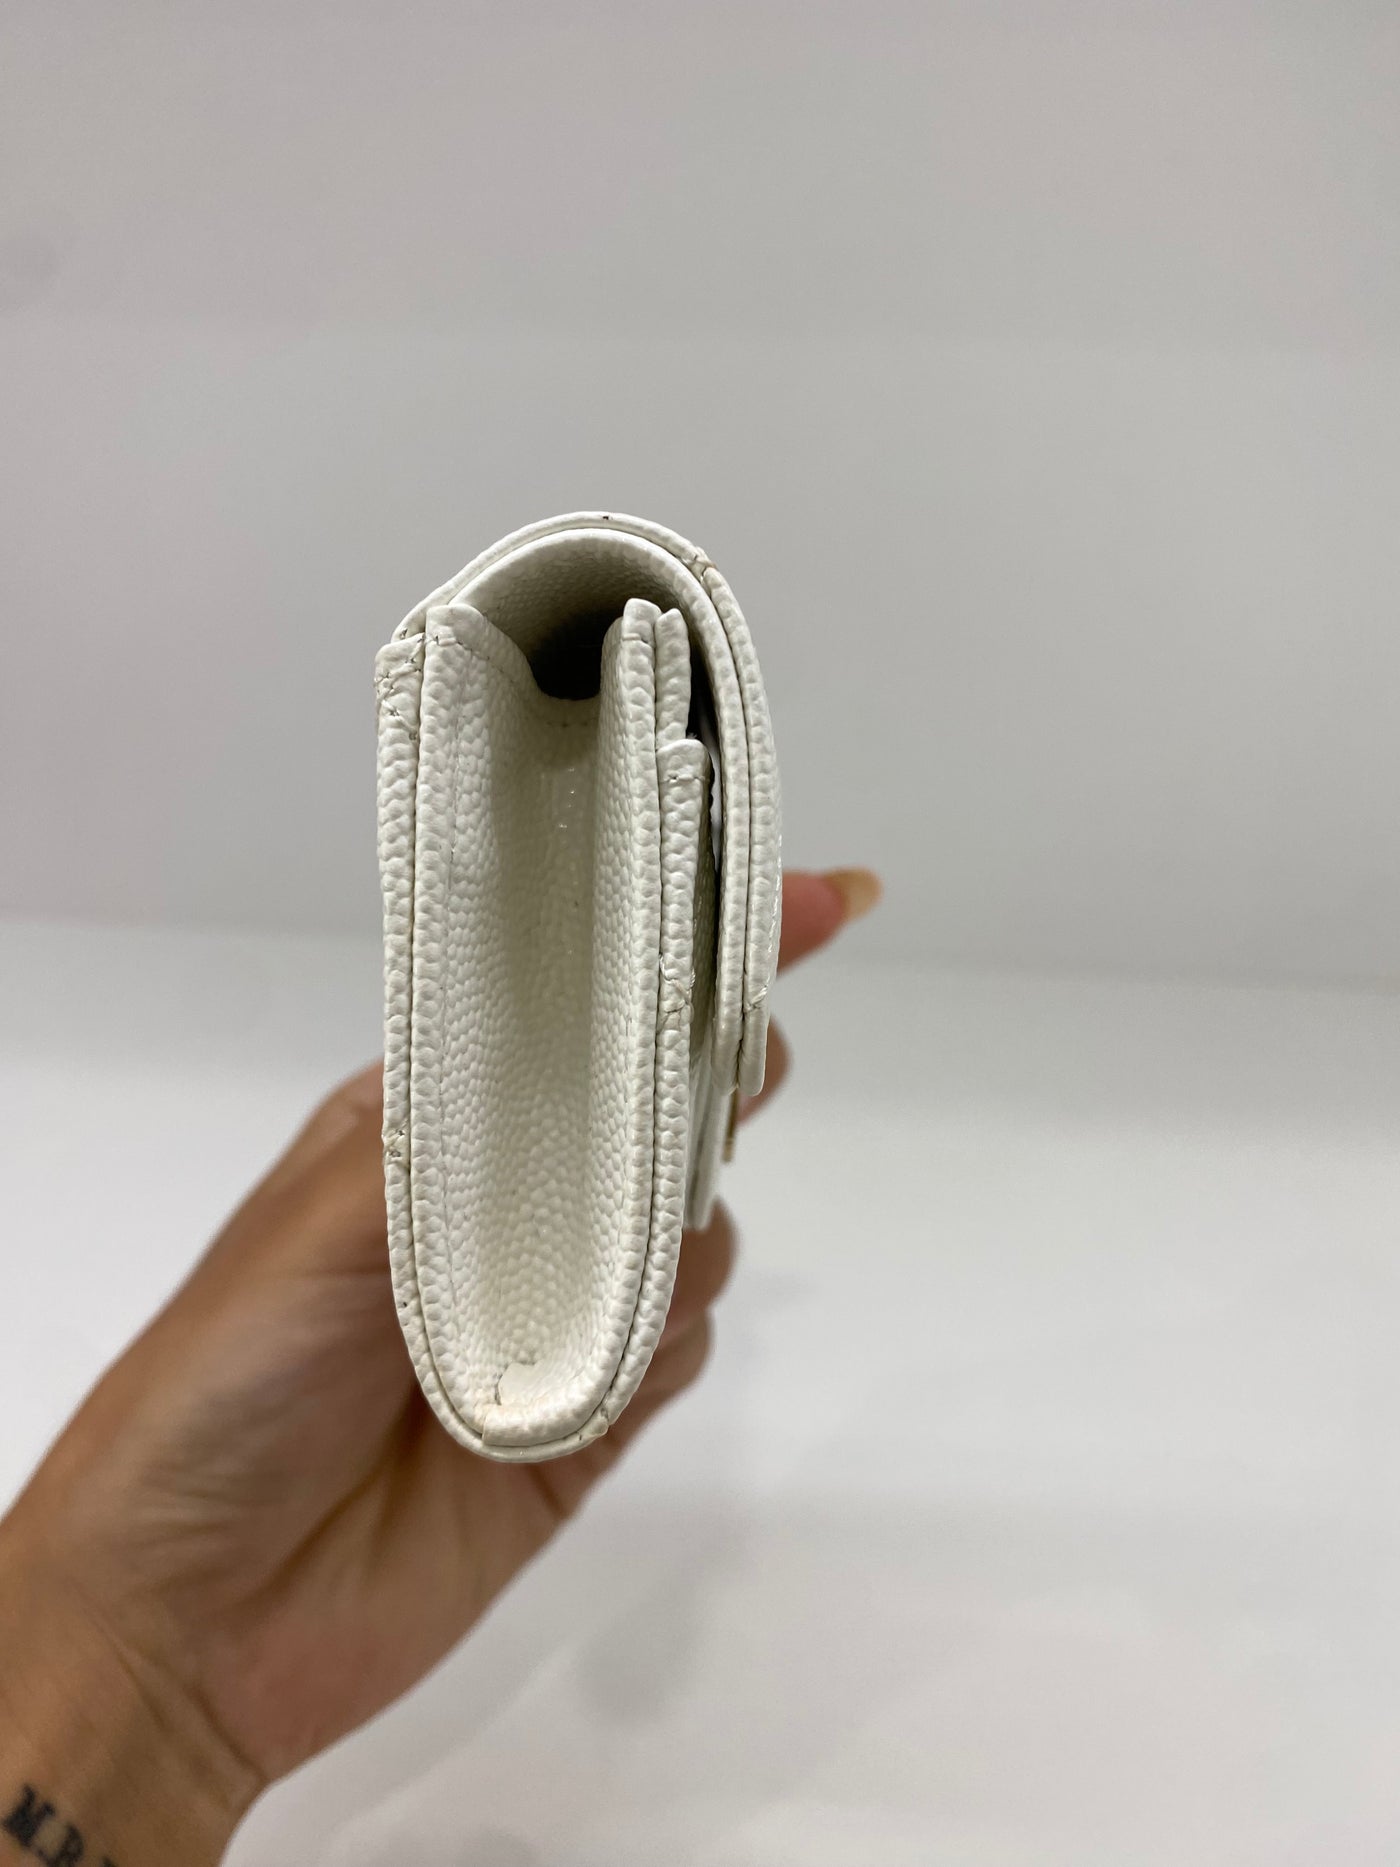 Chanel Wallet White